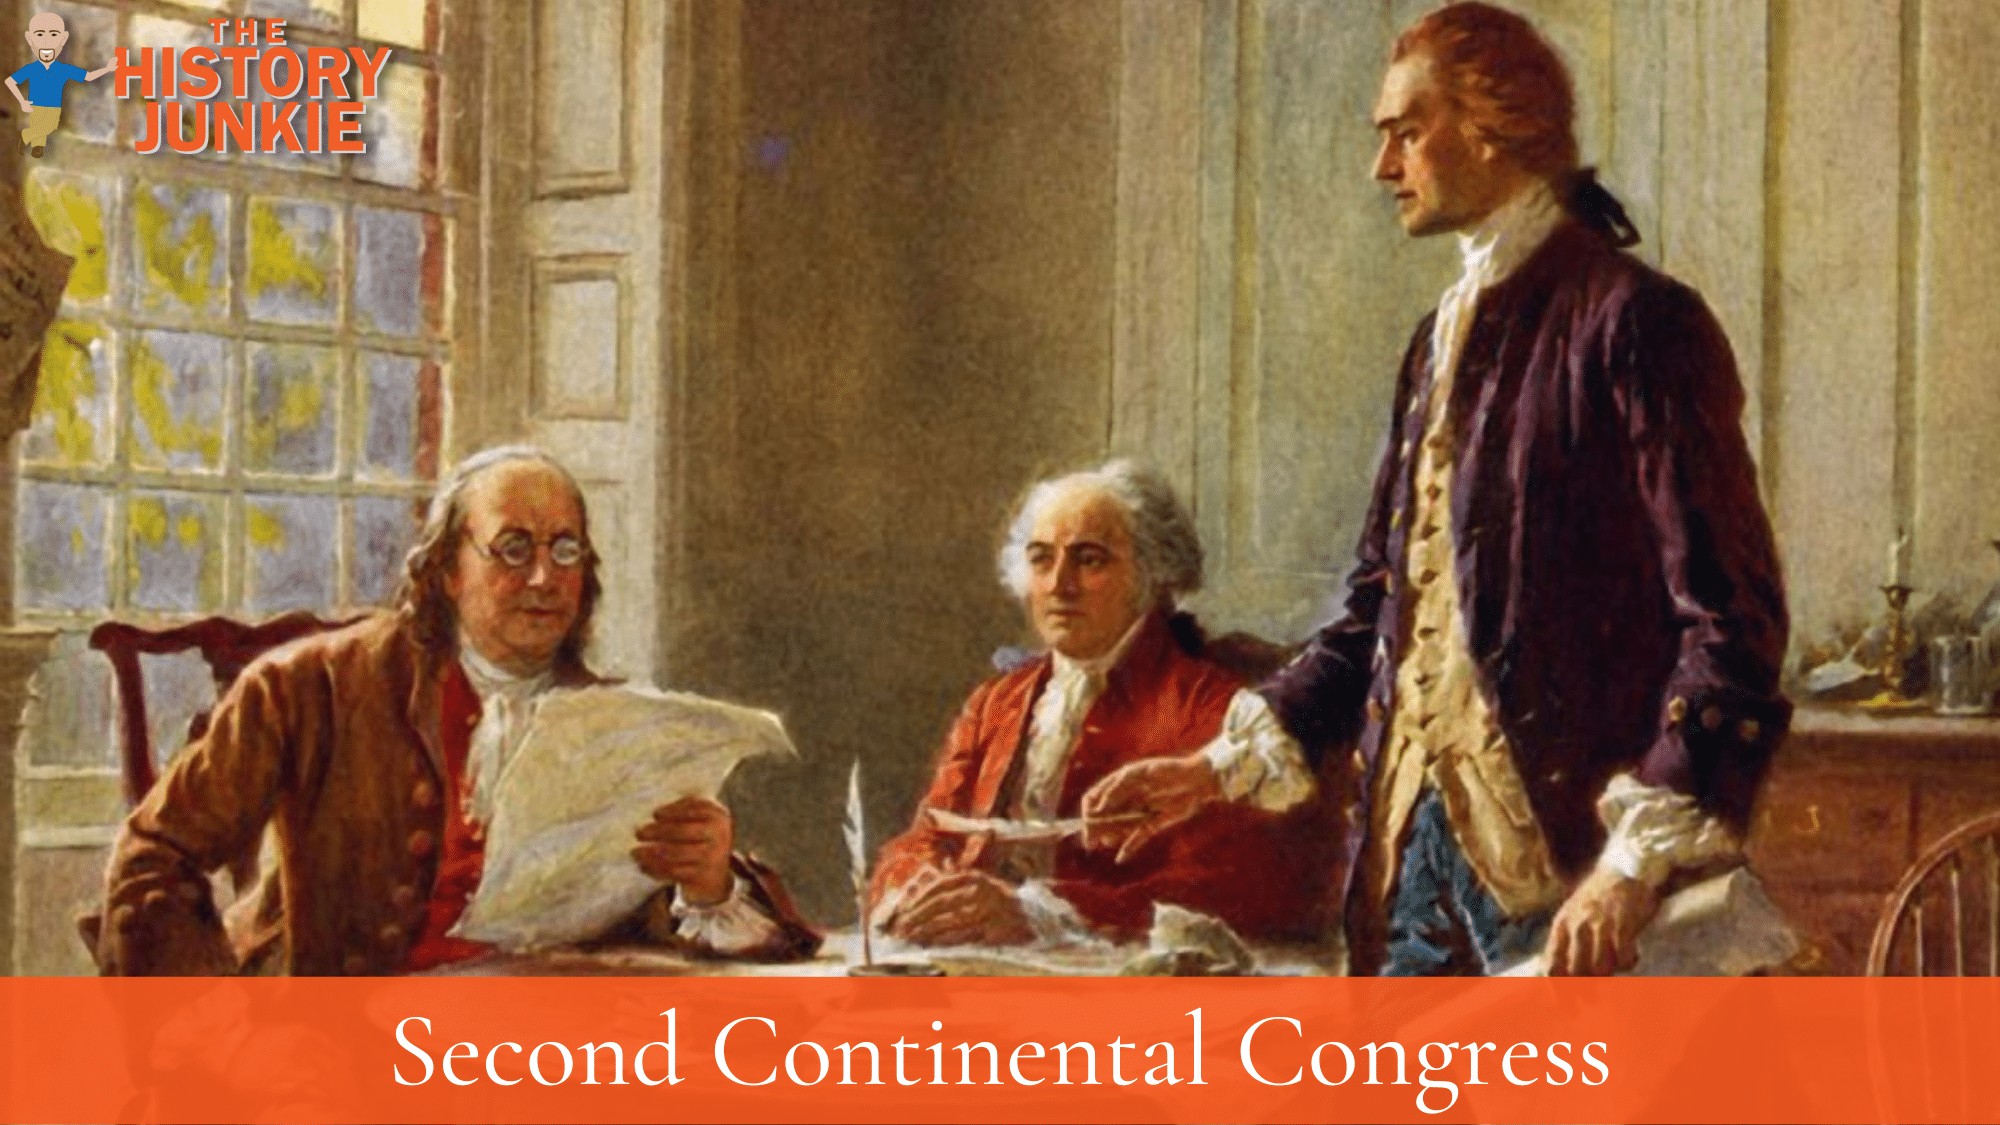 Aecond Continental Congress